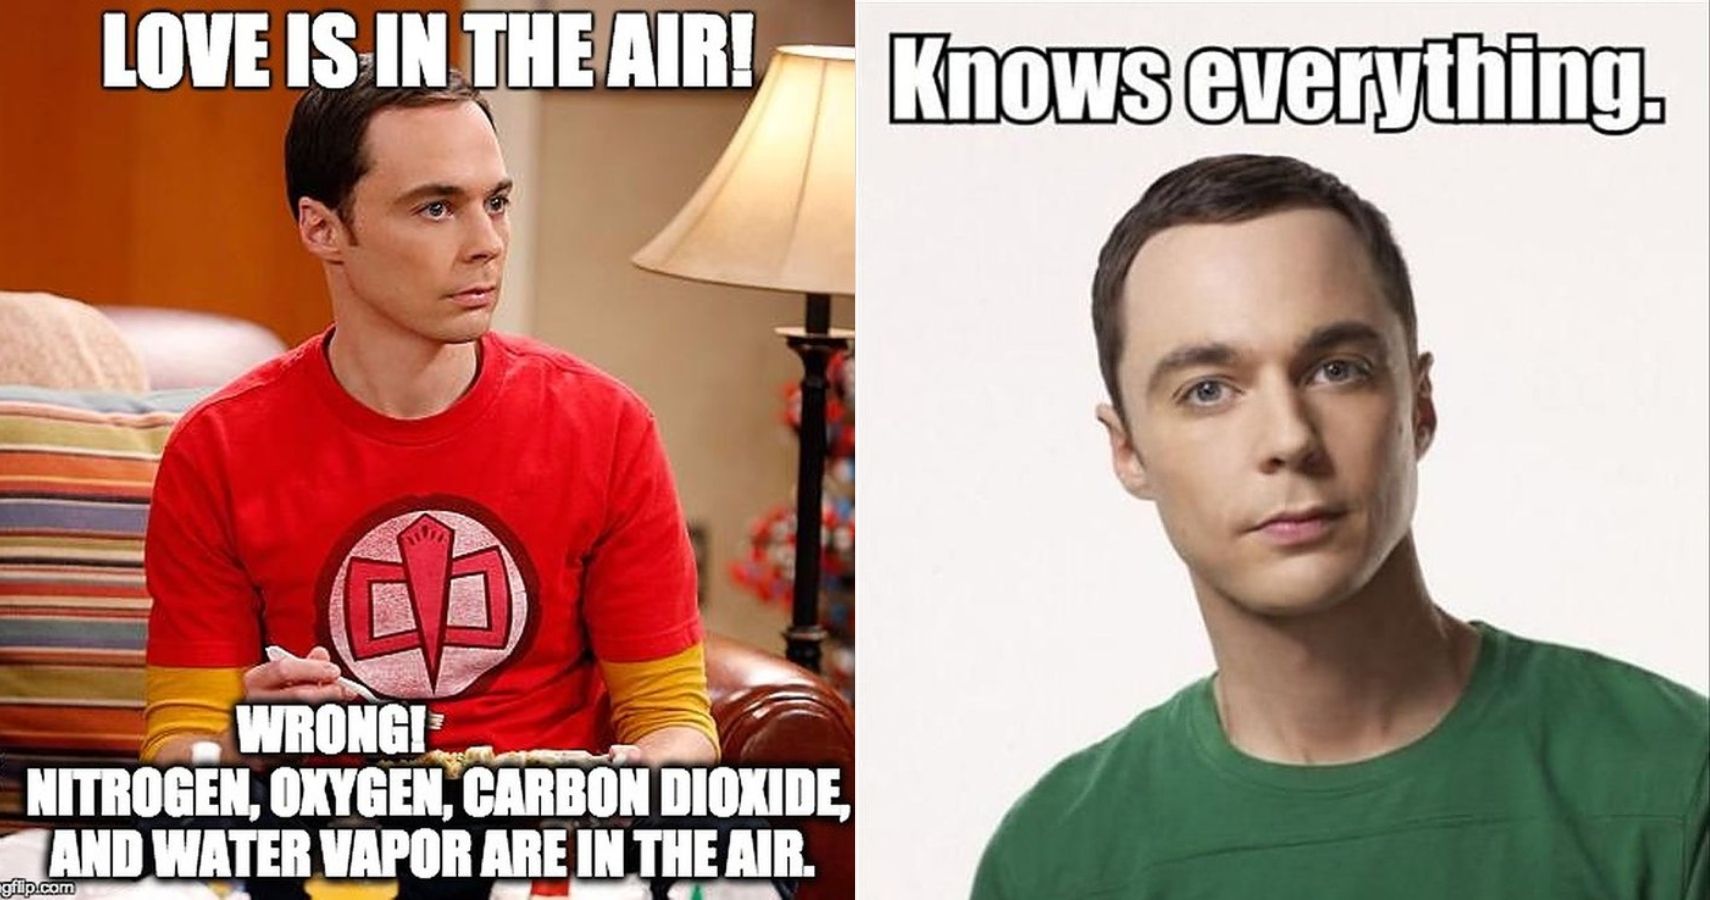 Big Bang Theory: 10 Hilarious Sheldon Memes That Are Too Funny